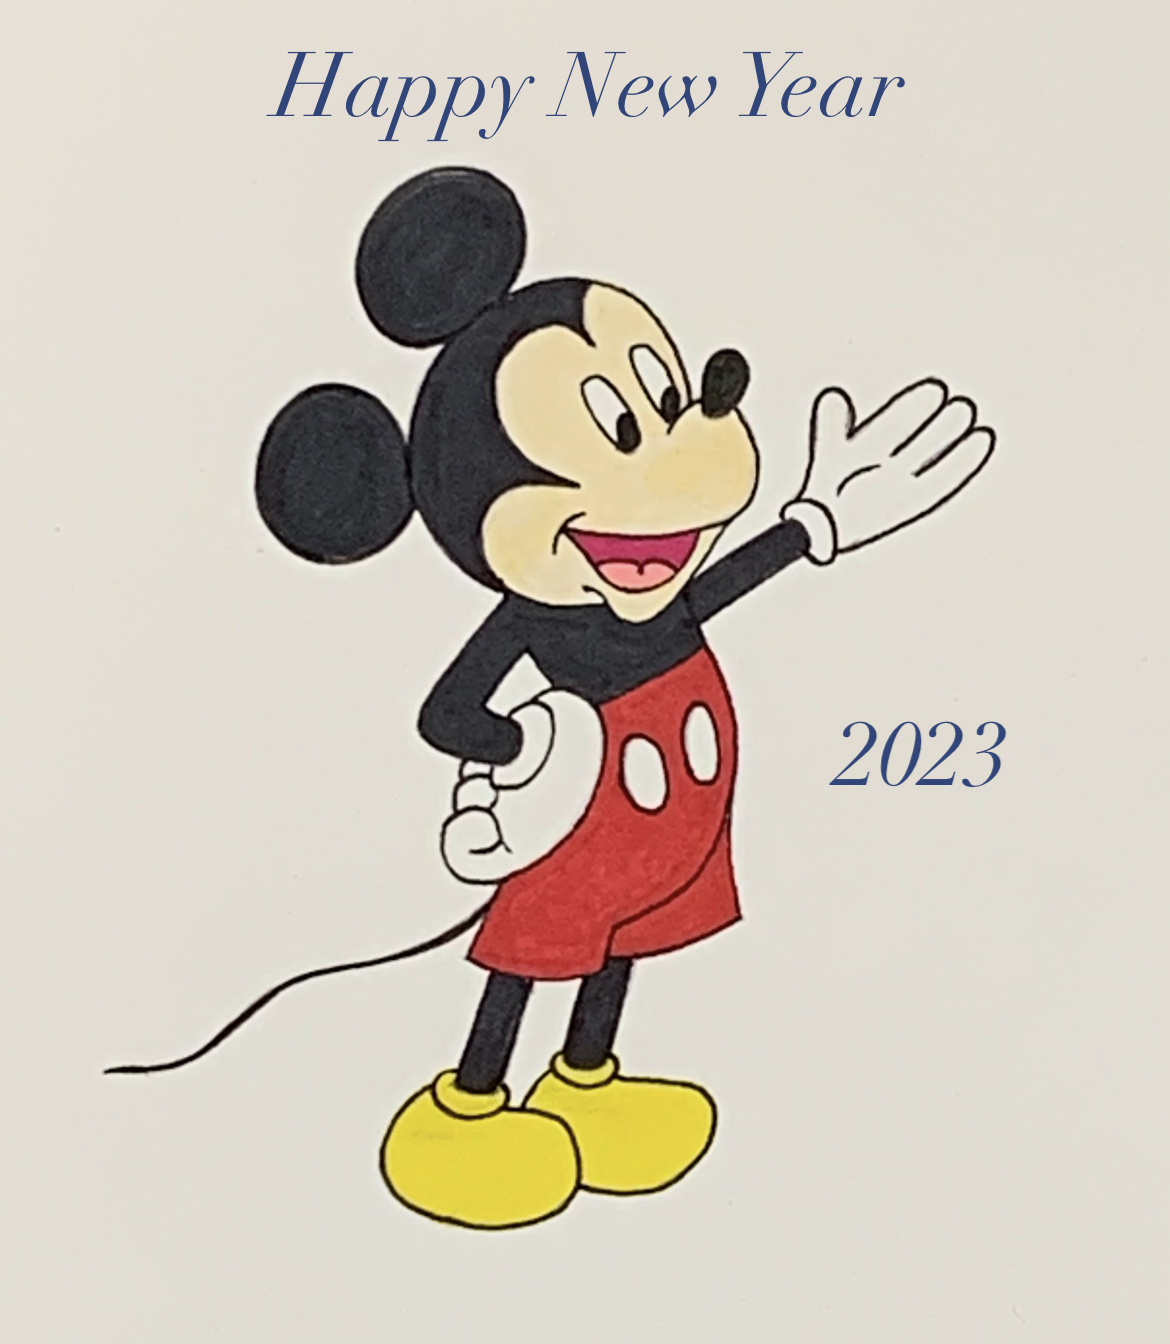 Happy Year from Mickey Mouse by jonstallion on DeviantArt